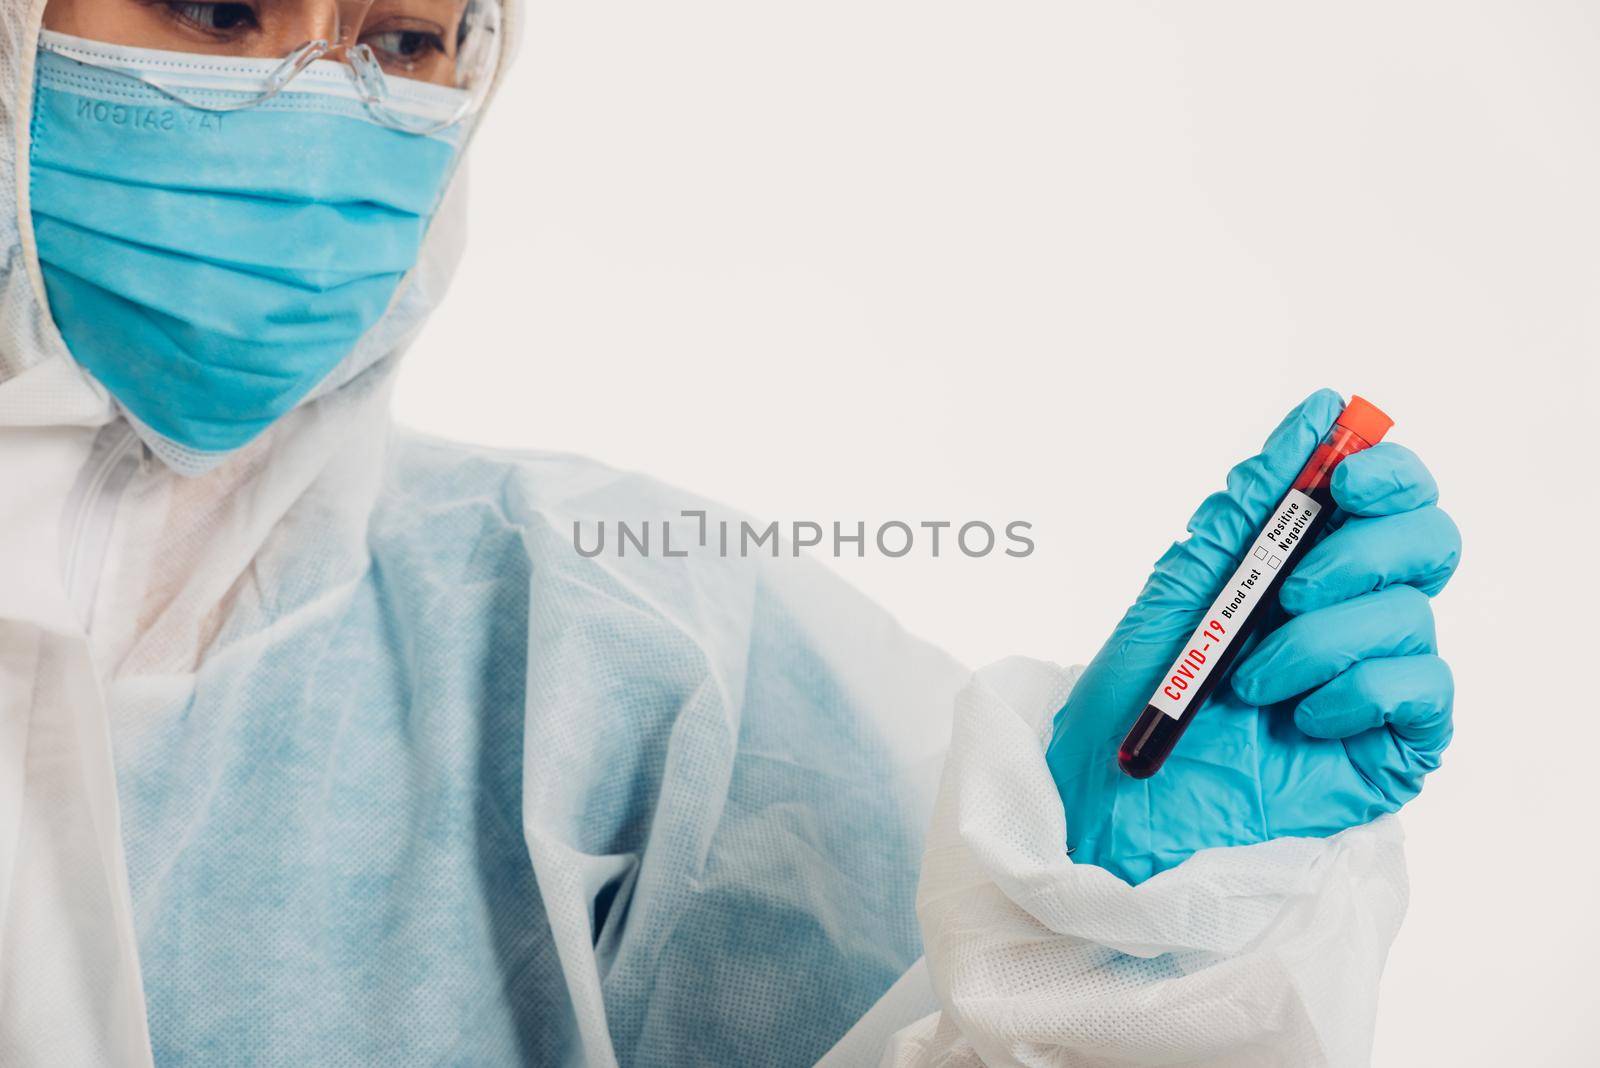 Medical scientist in PPE uniform wear a mask holding test tube Coronavirus by Sorapop